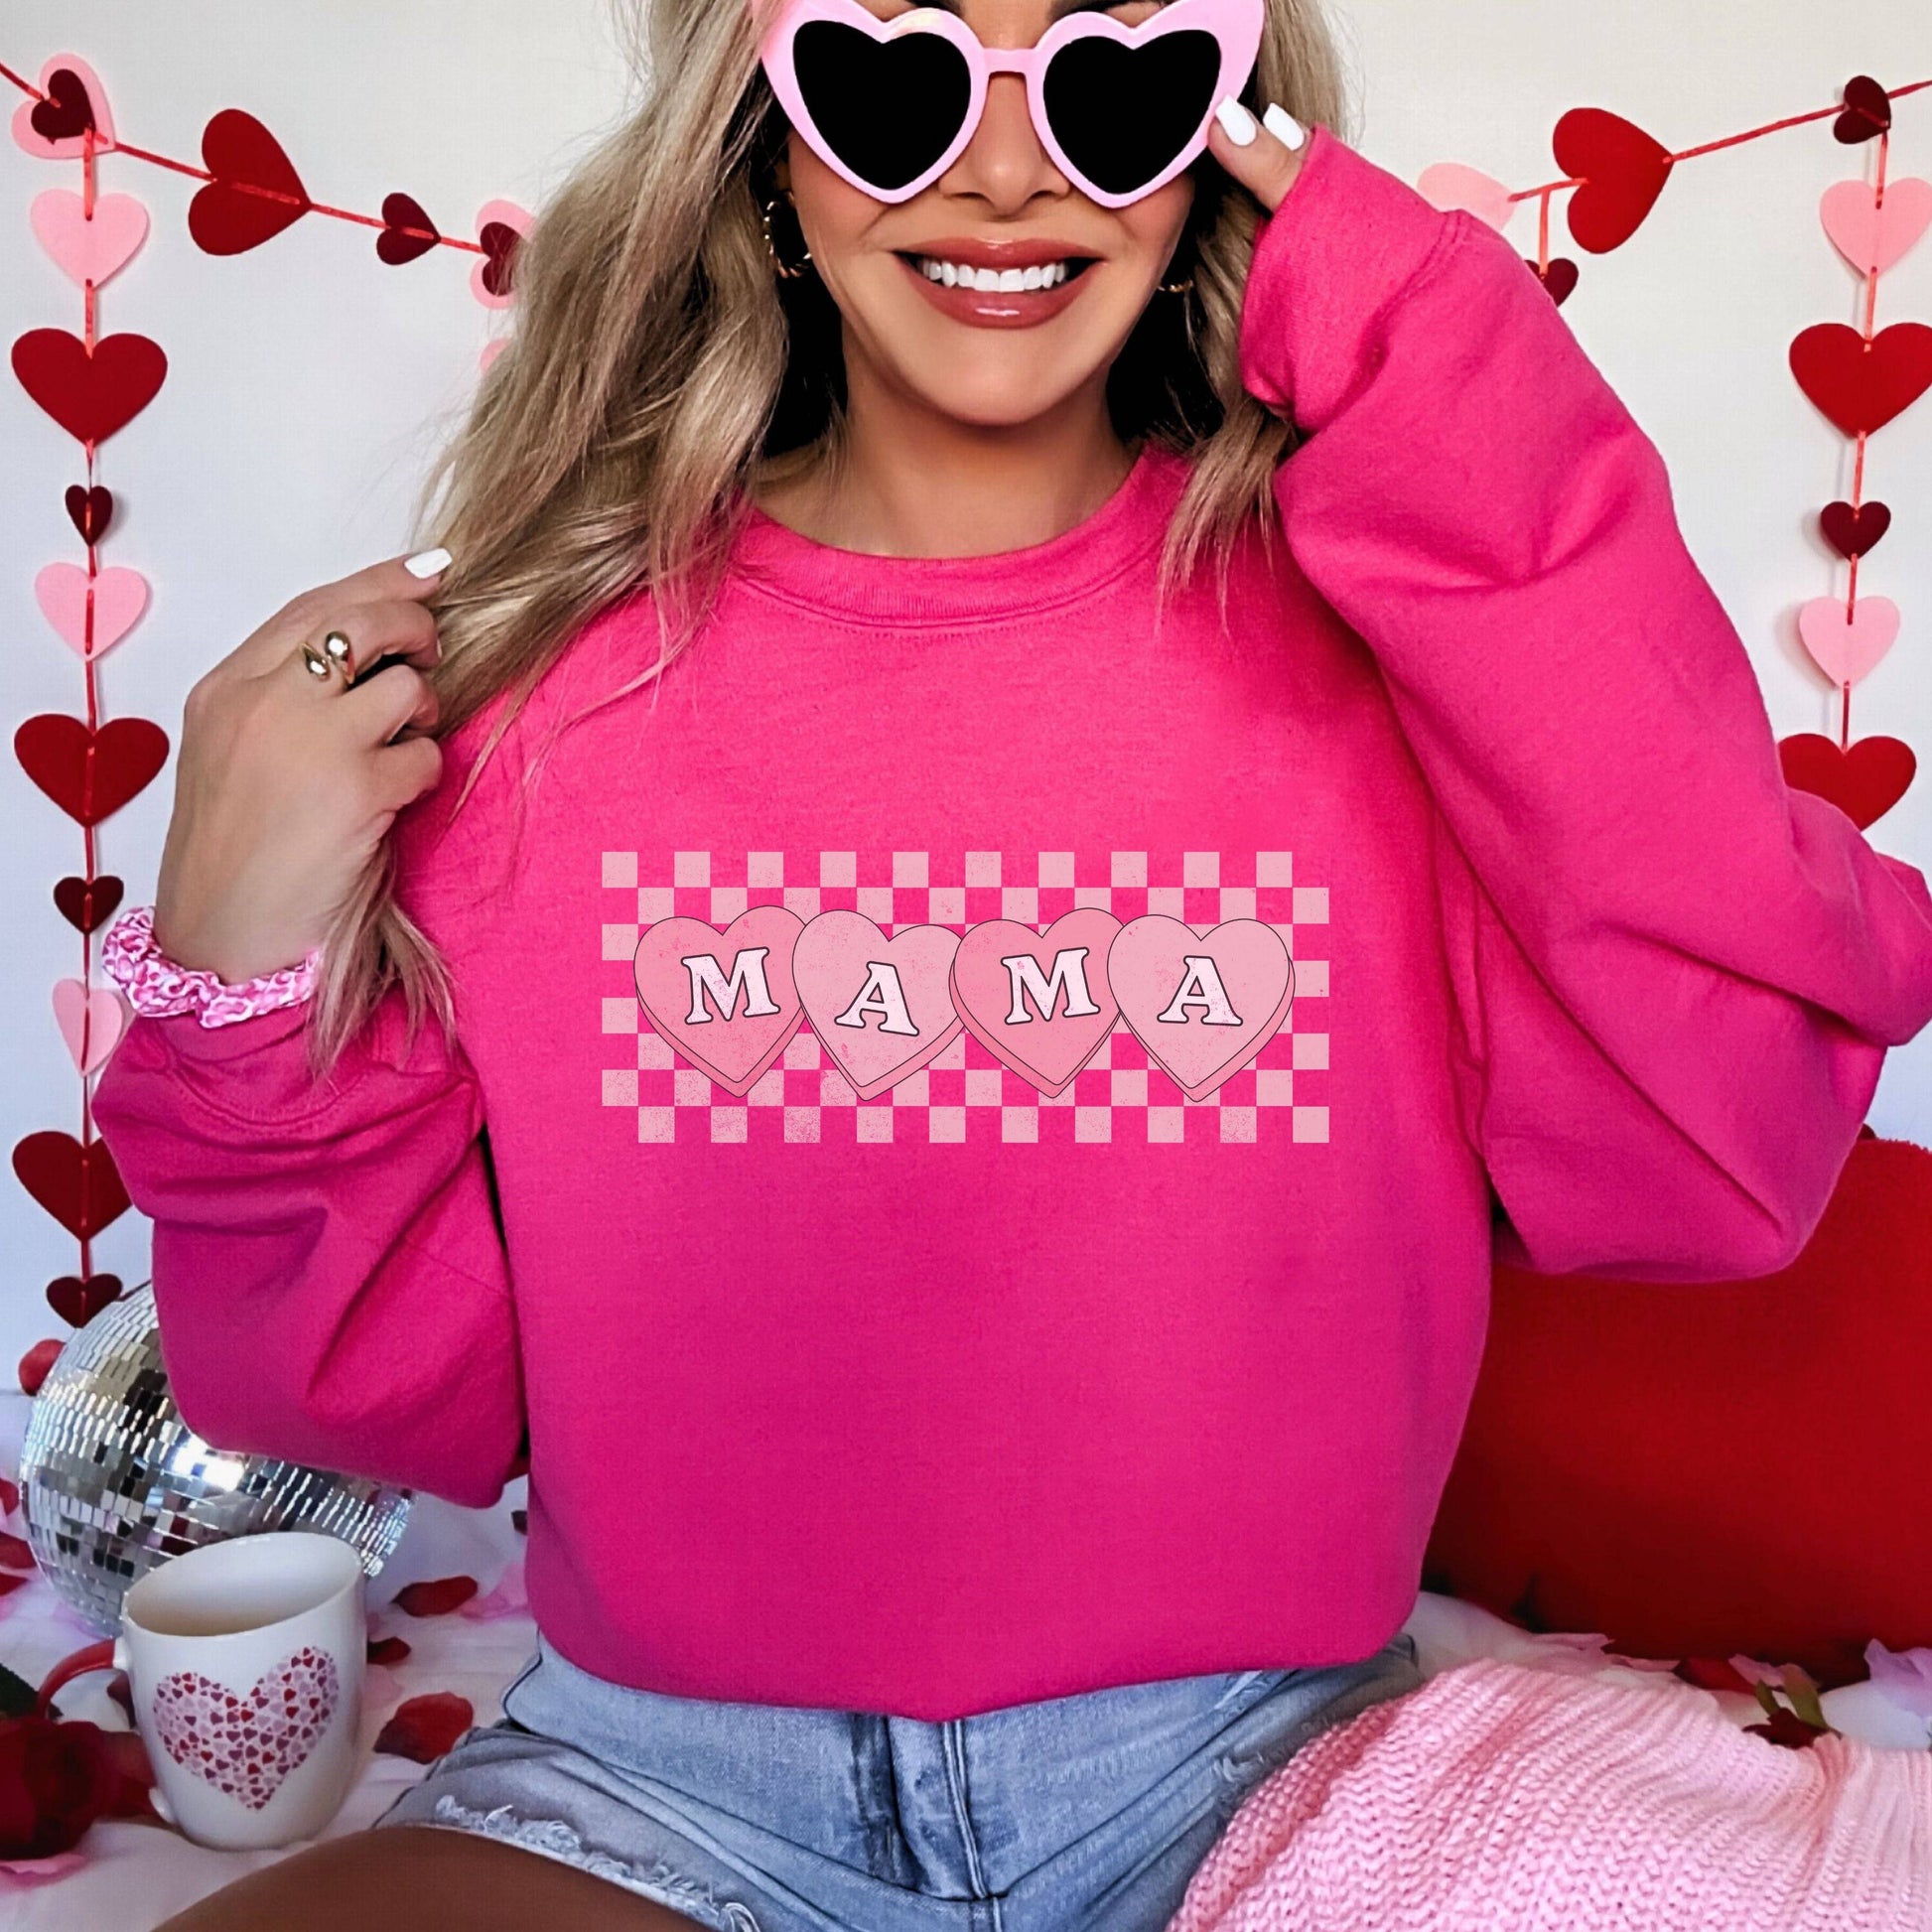 Pink Valentines Love Heart Leopard Plaid Hoodie